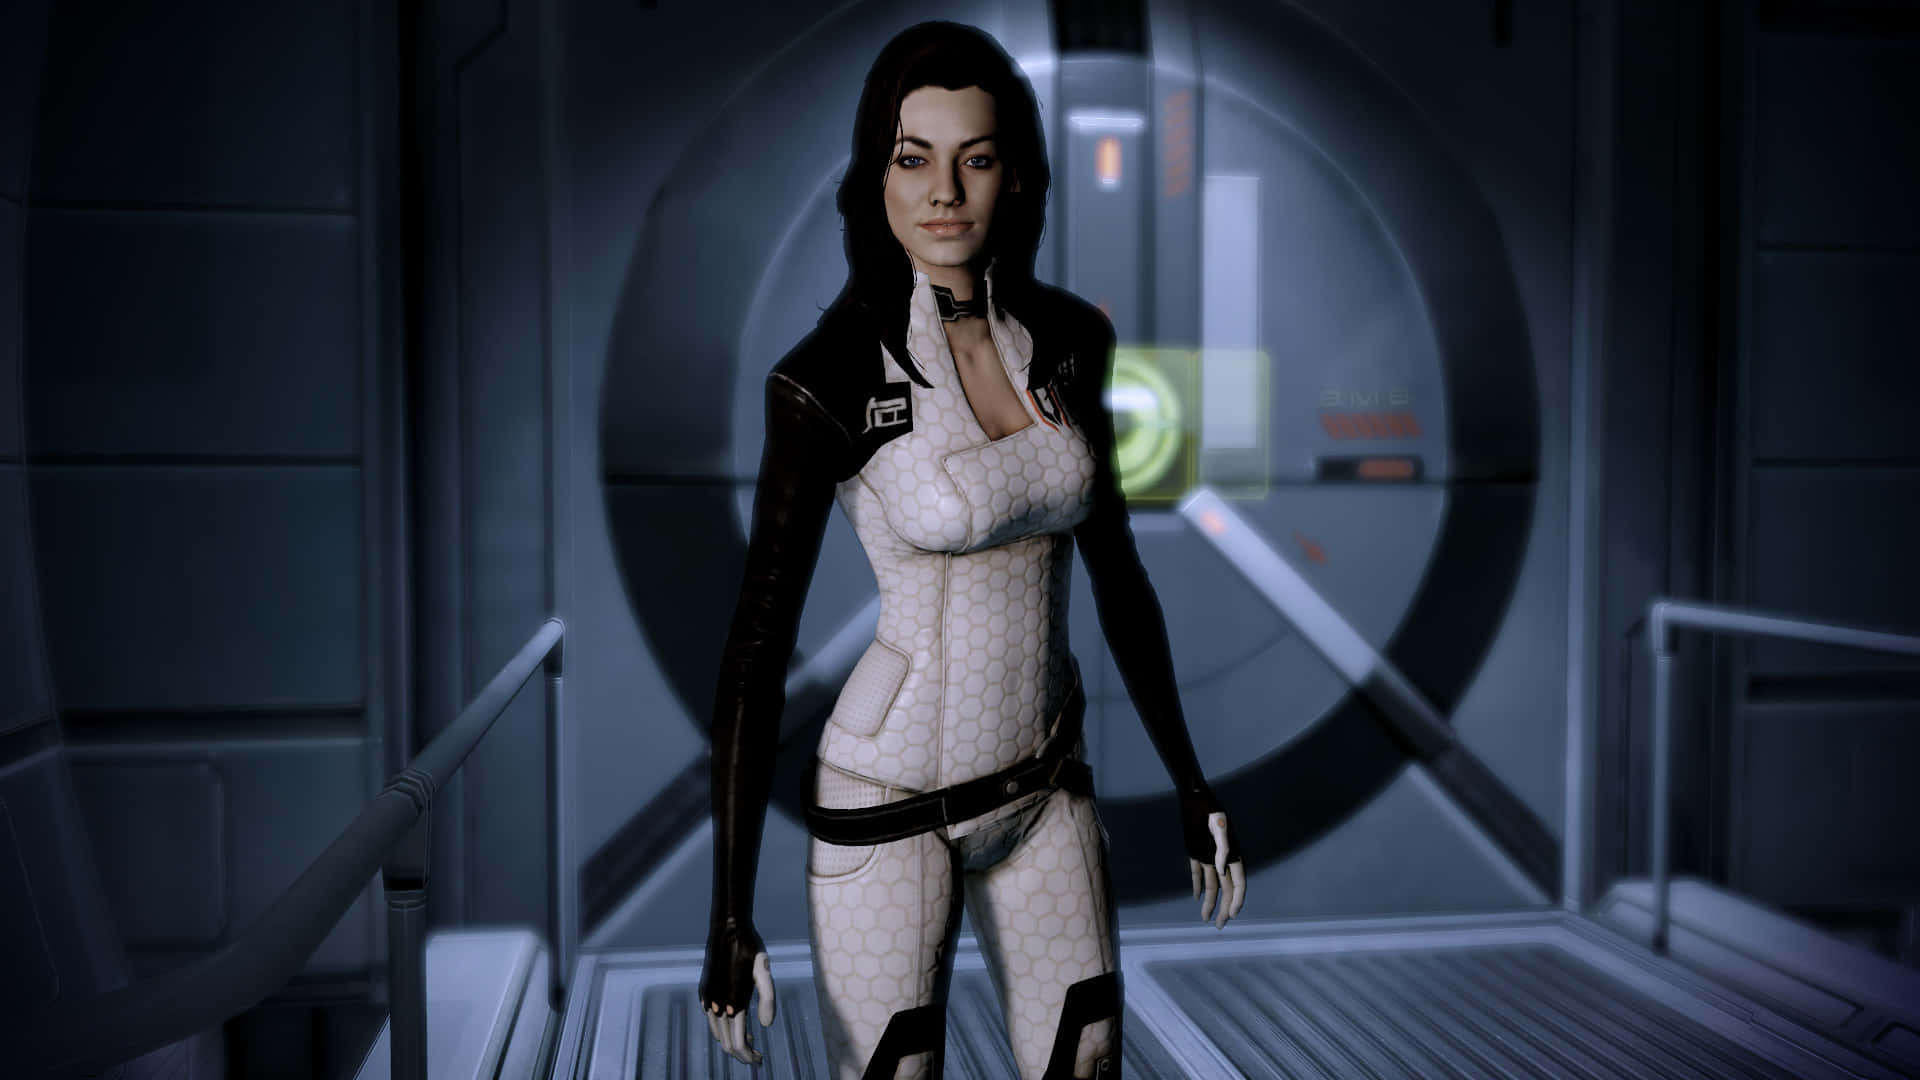 Captivating Image Of Miranda Lawson From Mass Effect Wallpaper